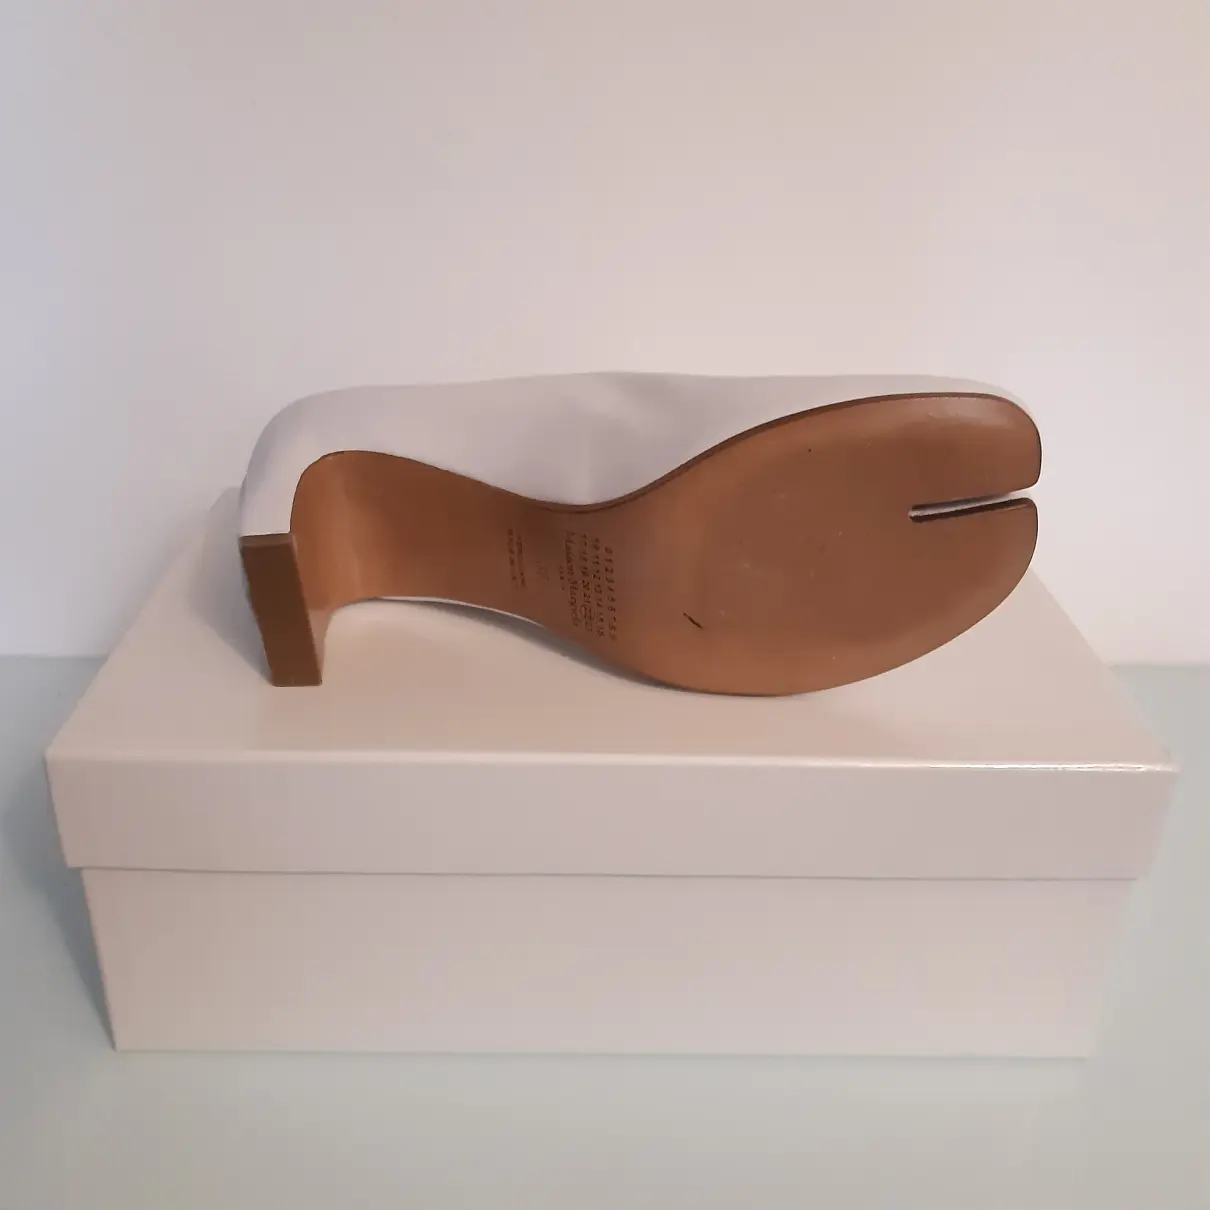 Buy Maison Martin Margiela Leather heels online